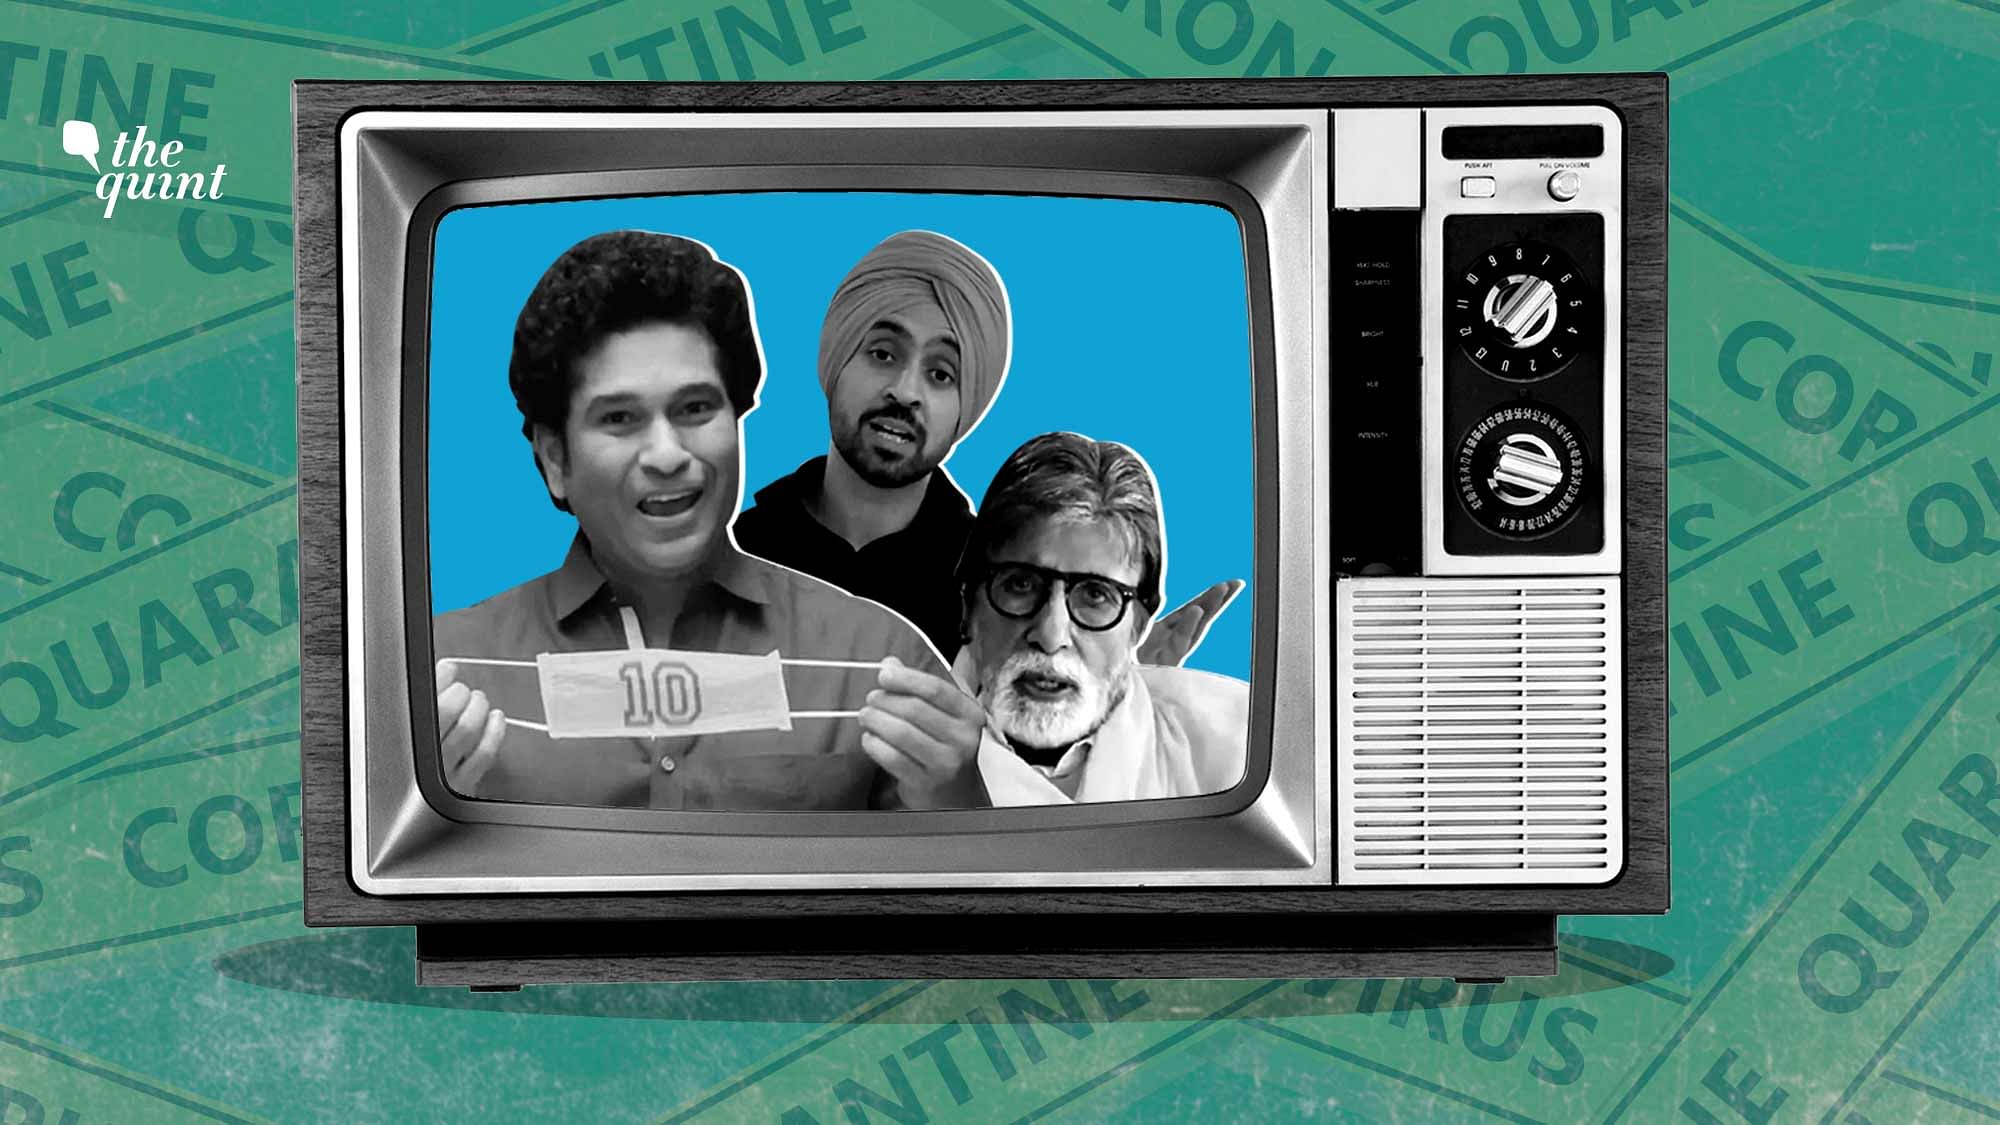 Sachin Tendulkar, Amitabh Bachchan and others have shot for ads during lockdown. 